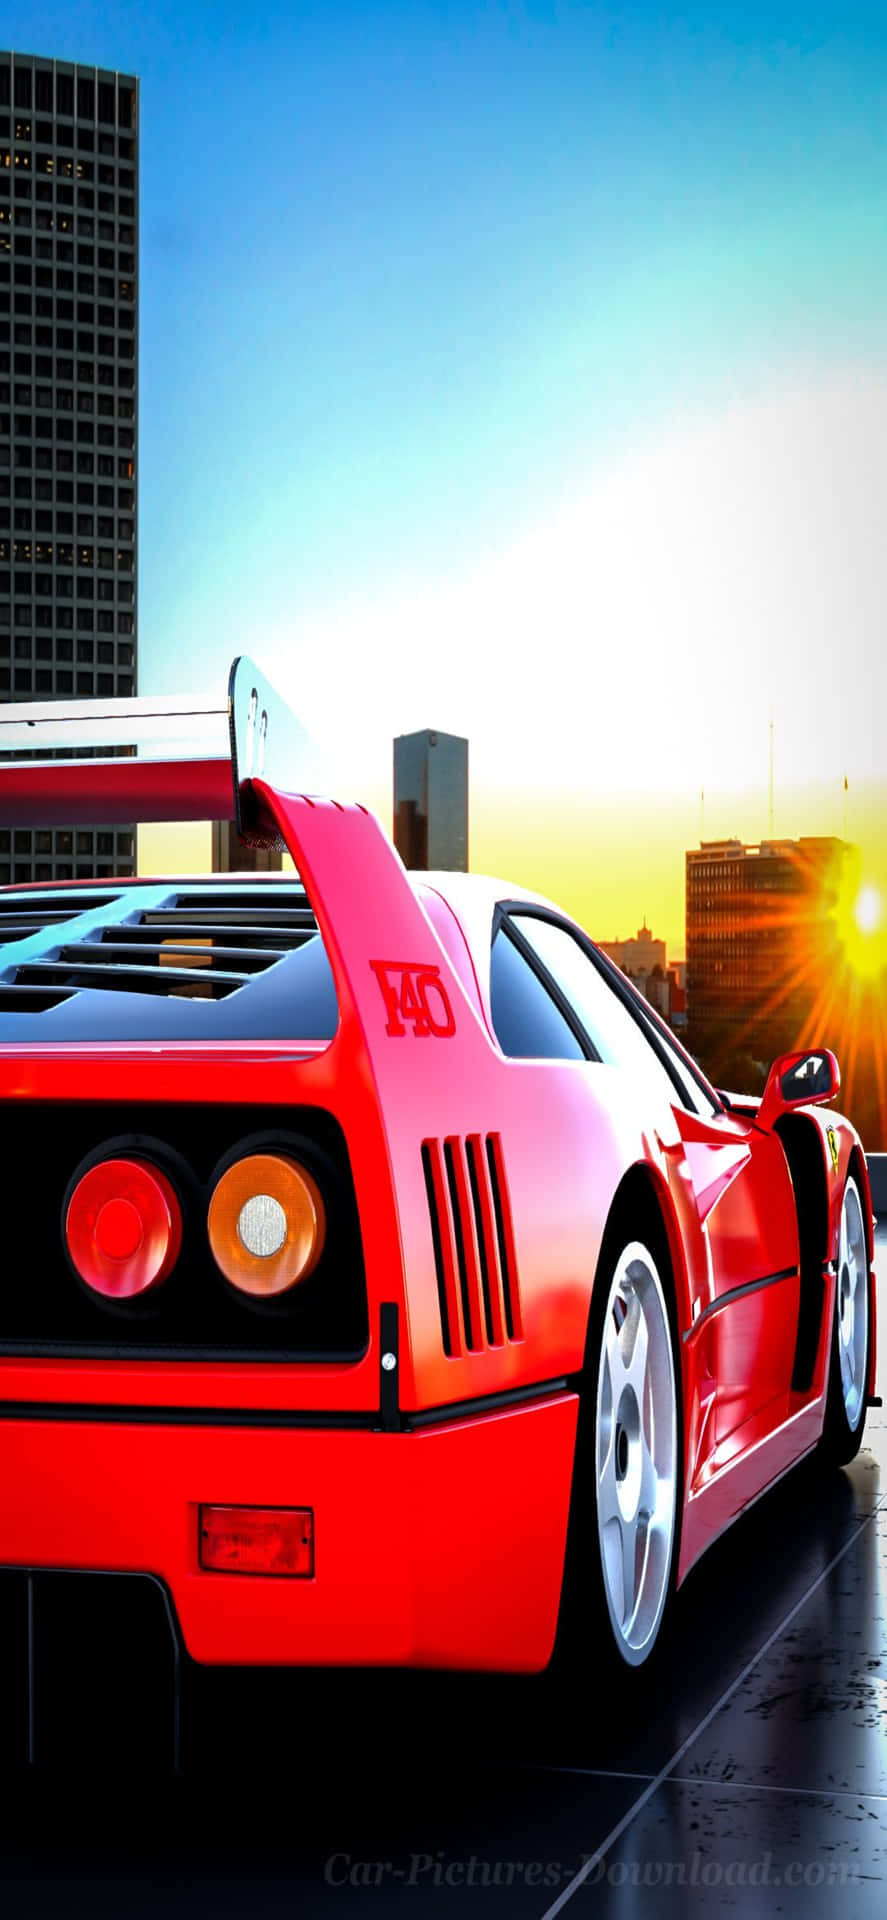 Iphone Xs Max Ferrari Baggrund Tegning af en rød Ferrari F40